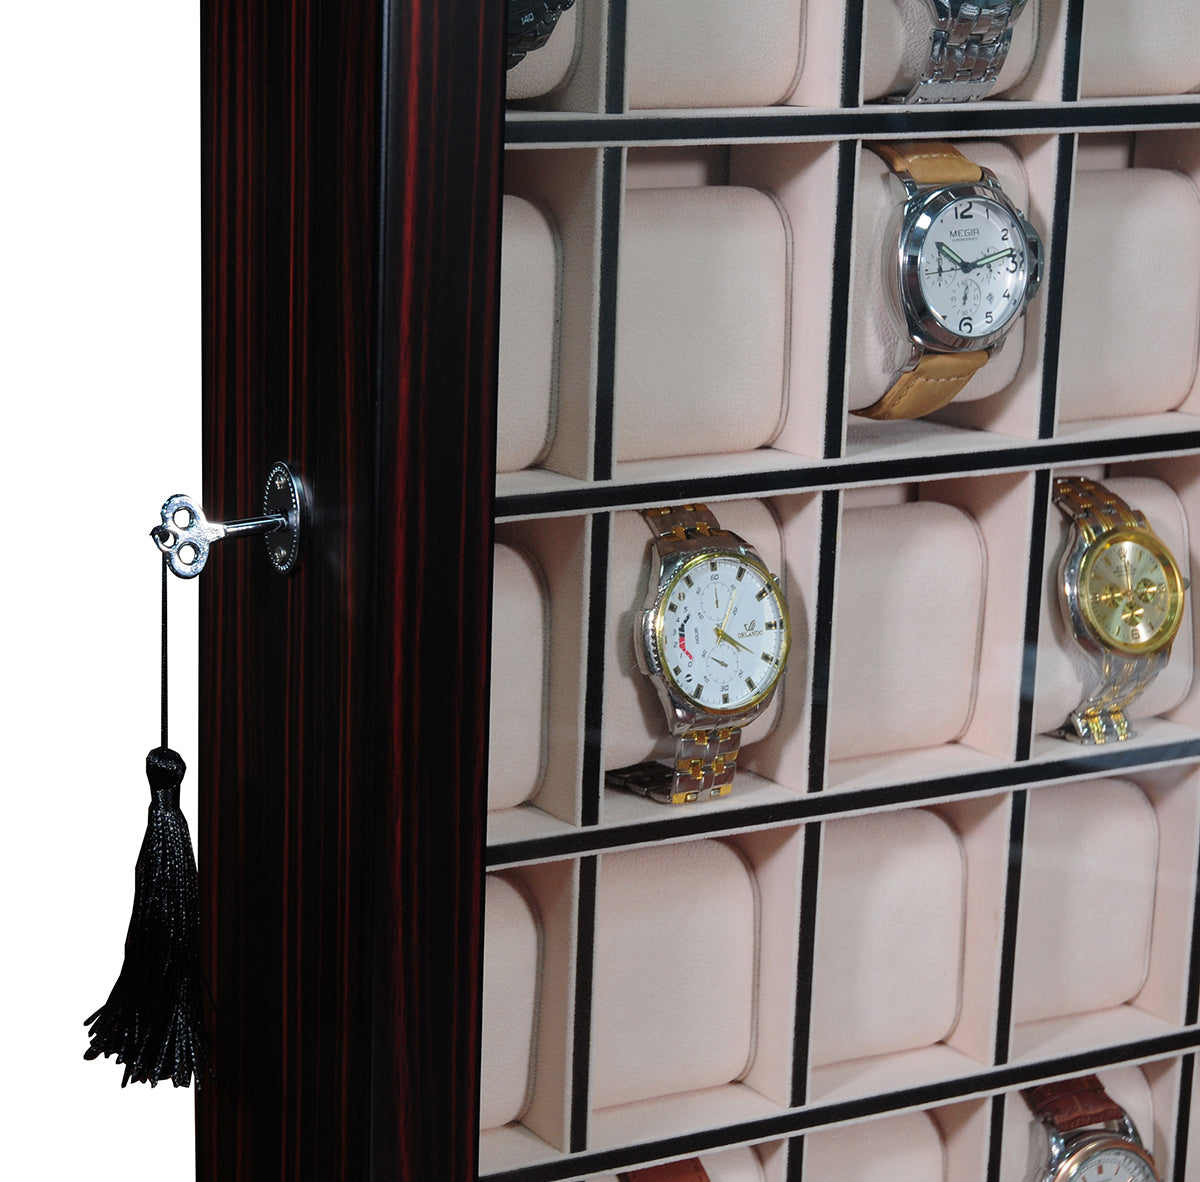 TIMELYBUYS 30-Piece Black Ebony Wood Watch Extra Height Clearance Display Case and 3 Drawer Storage Organizer Box